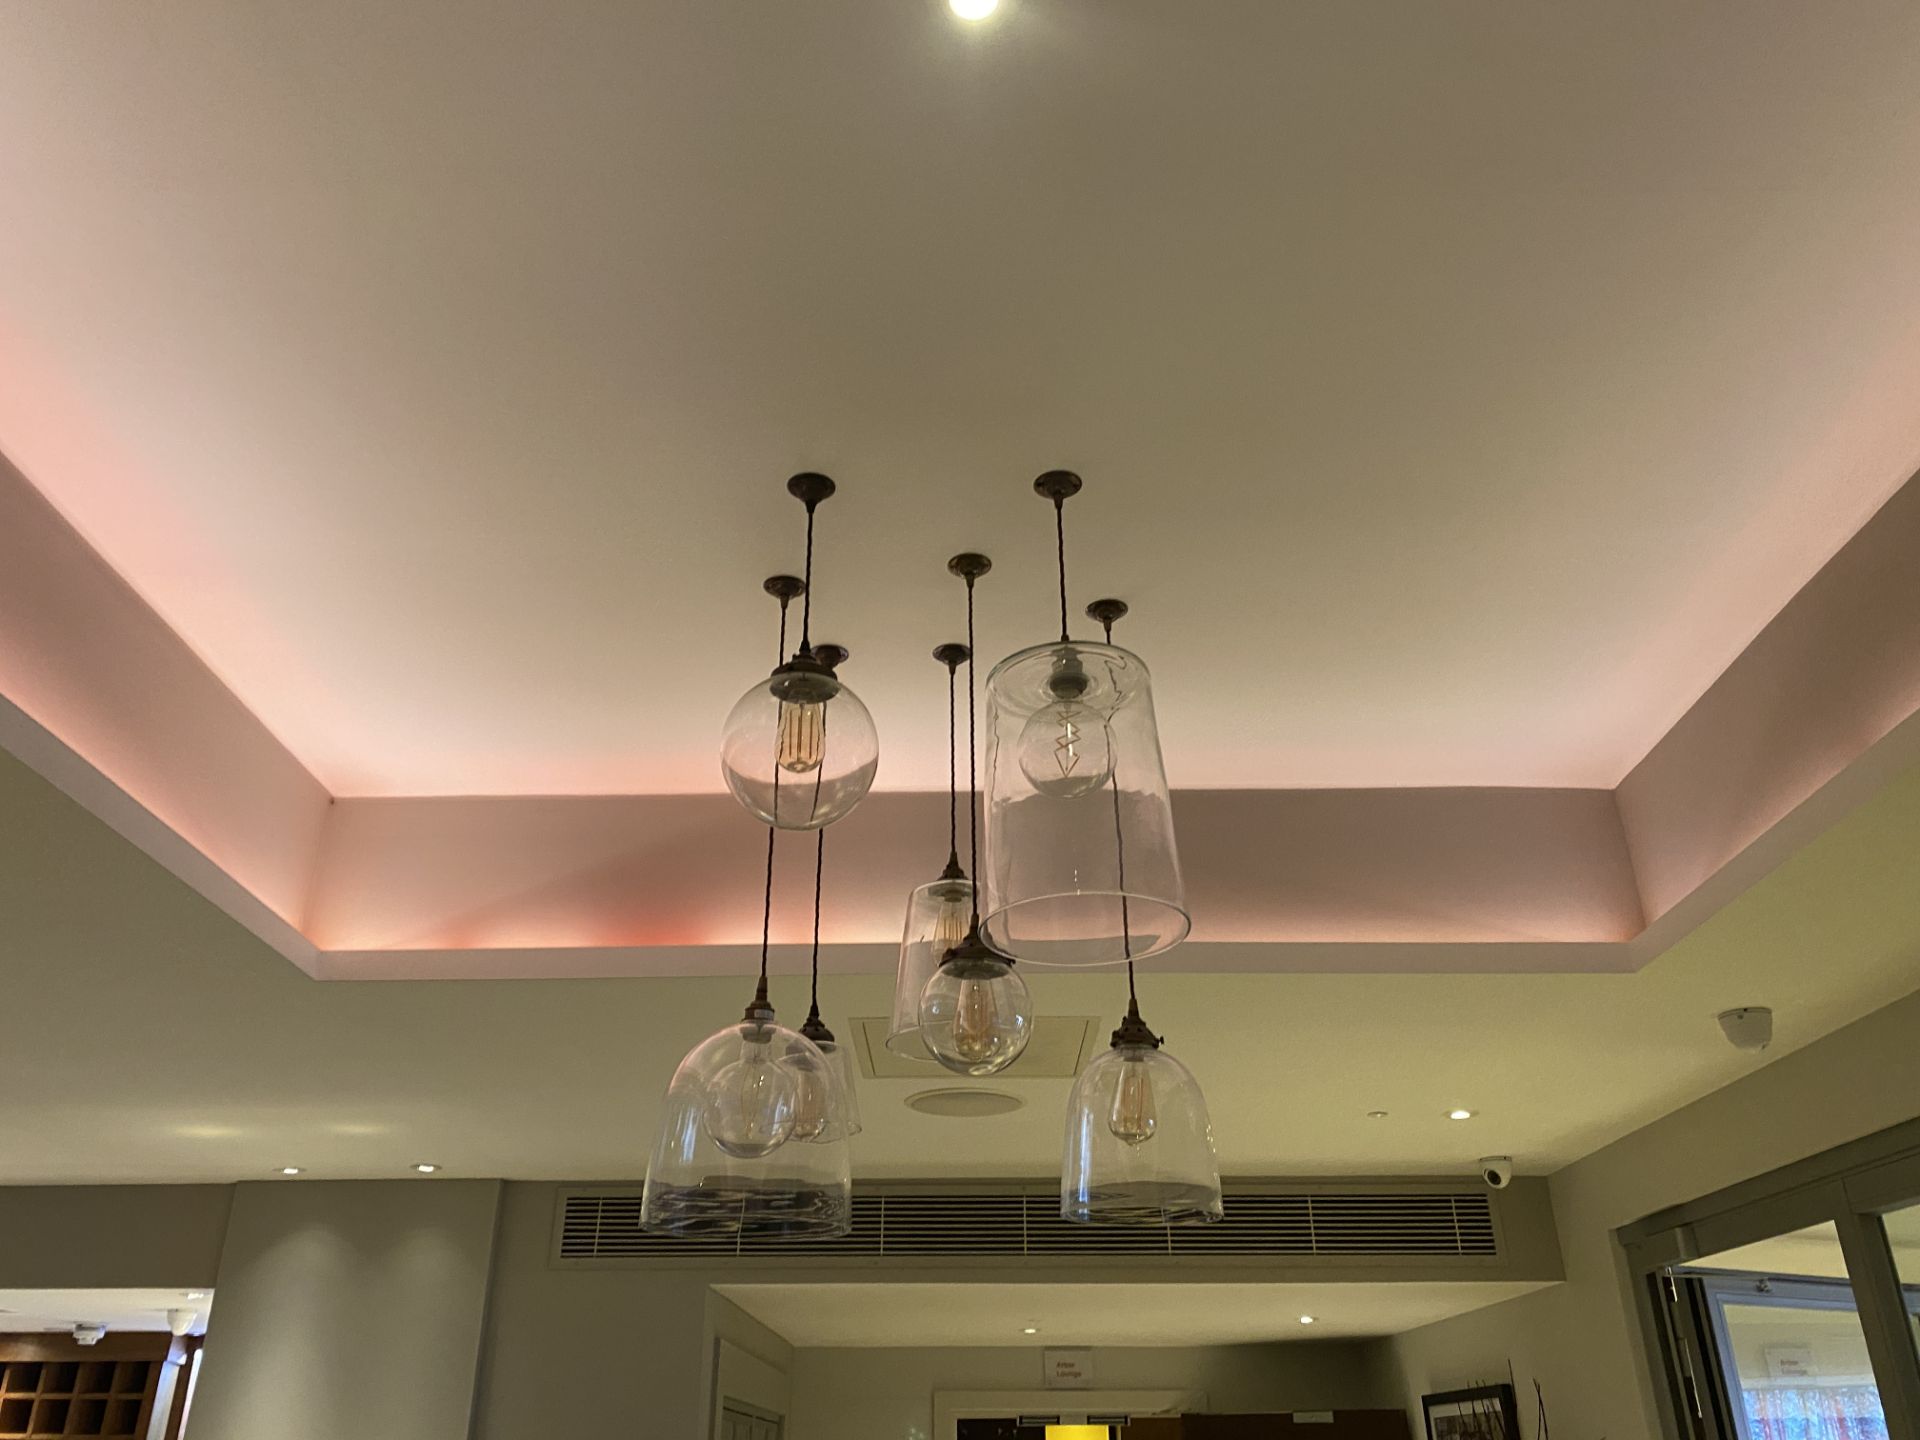 7x designer glass pendant lights - Image 2 of 3